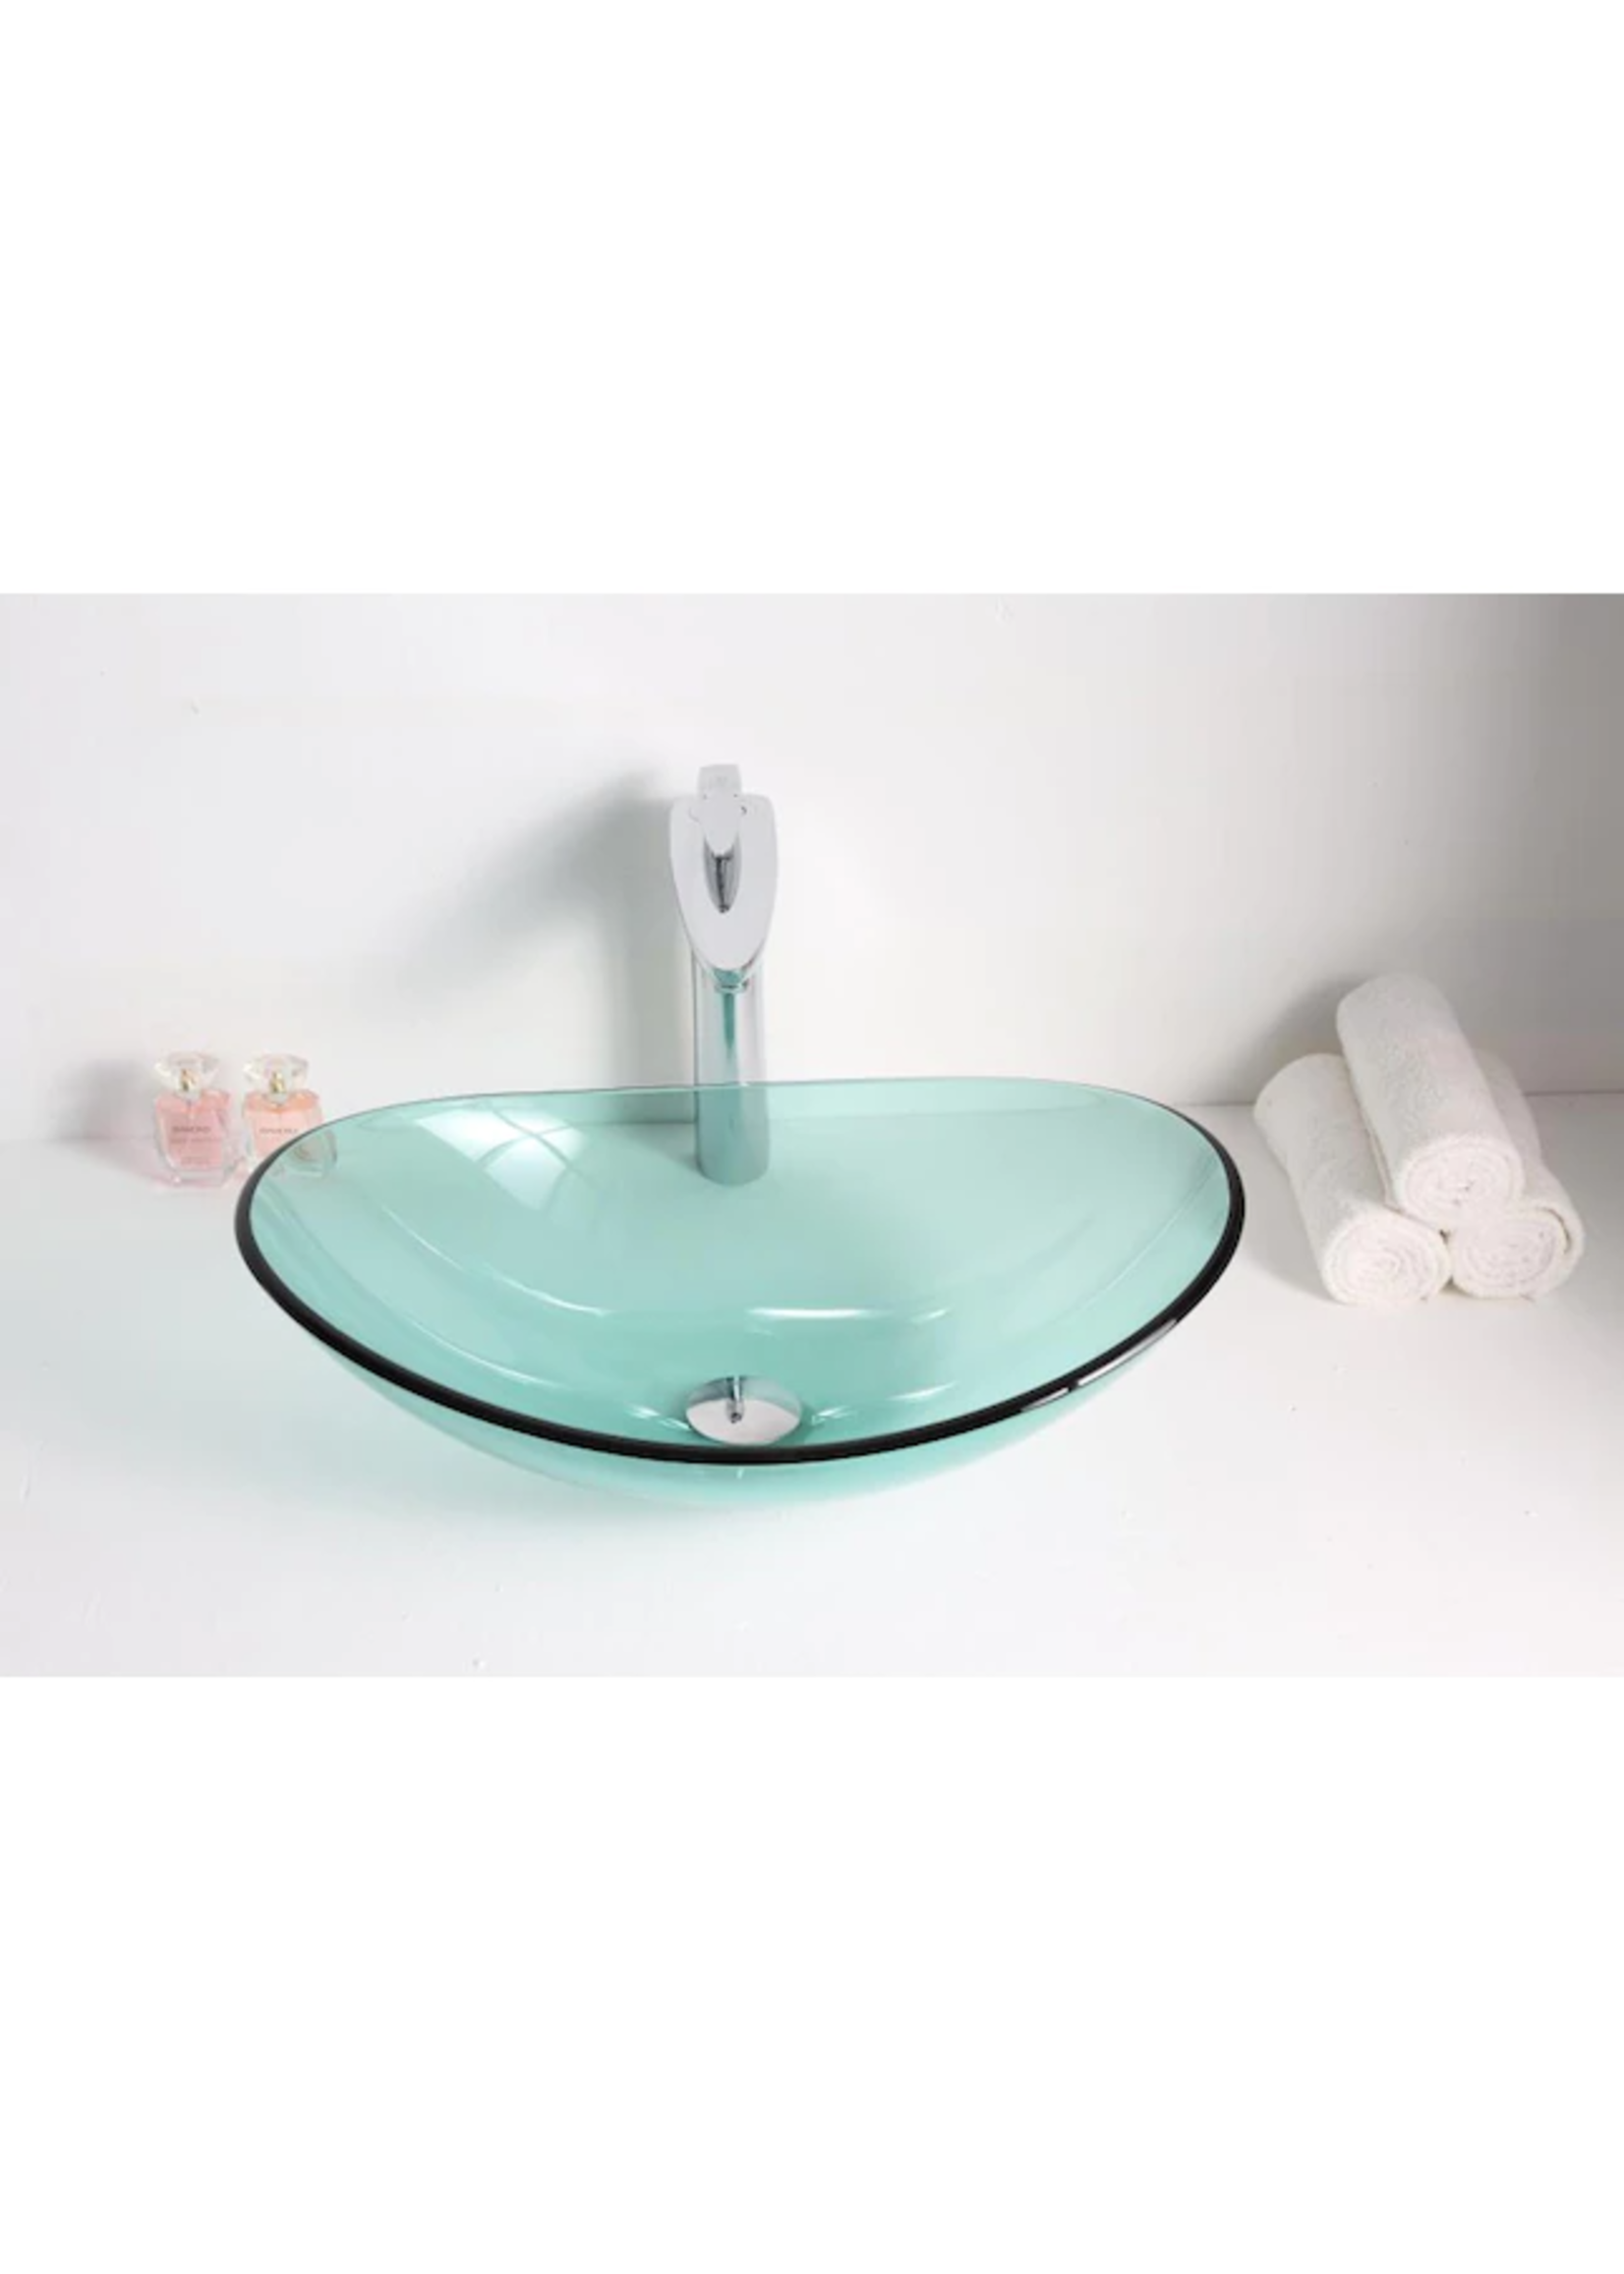 *Tale Lustrous Green/Blue Tempered Glass Oval Vessel Bathroom Sink